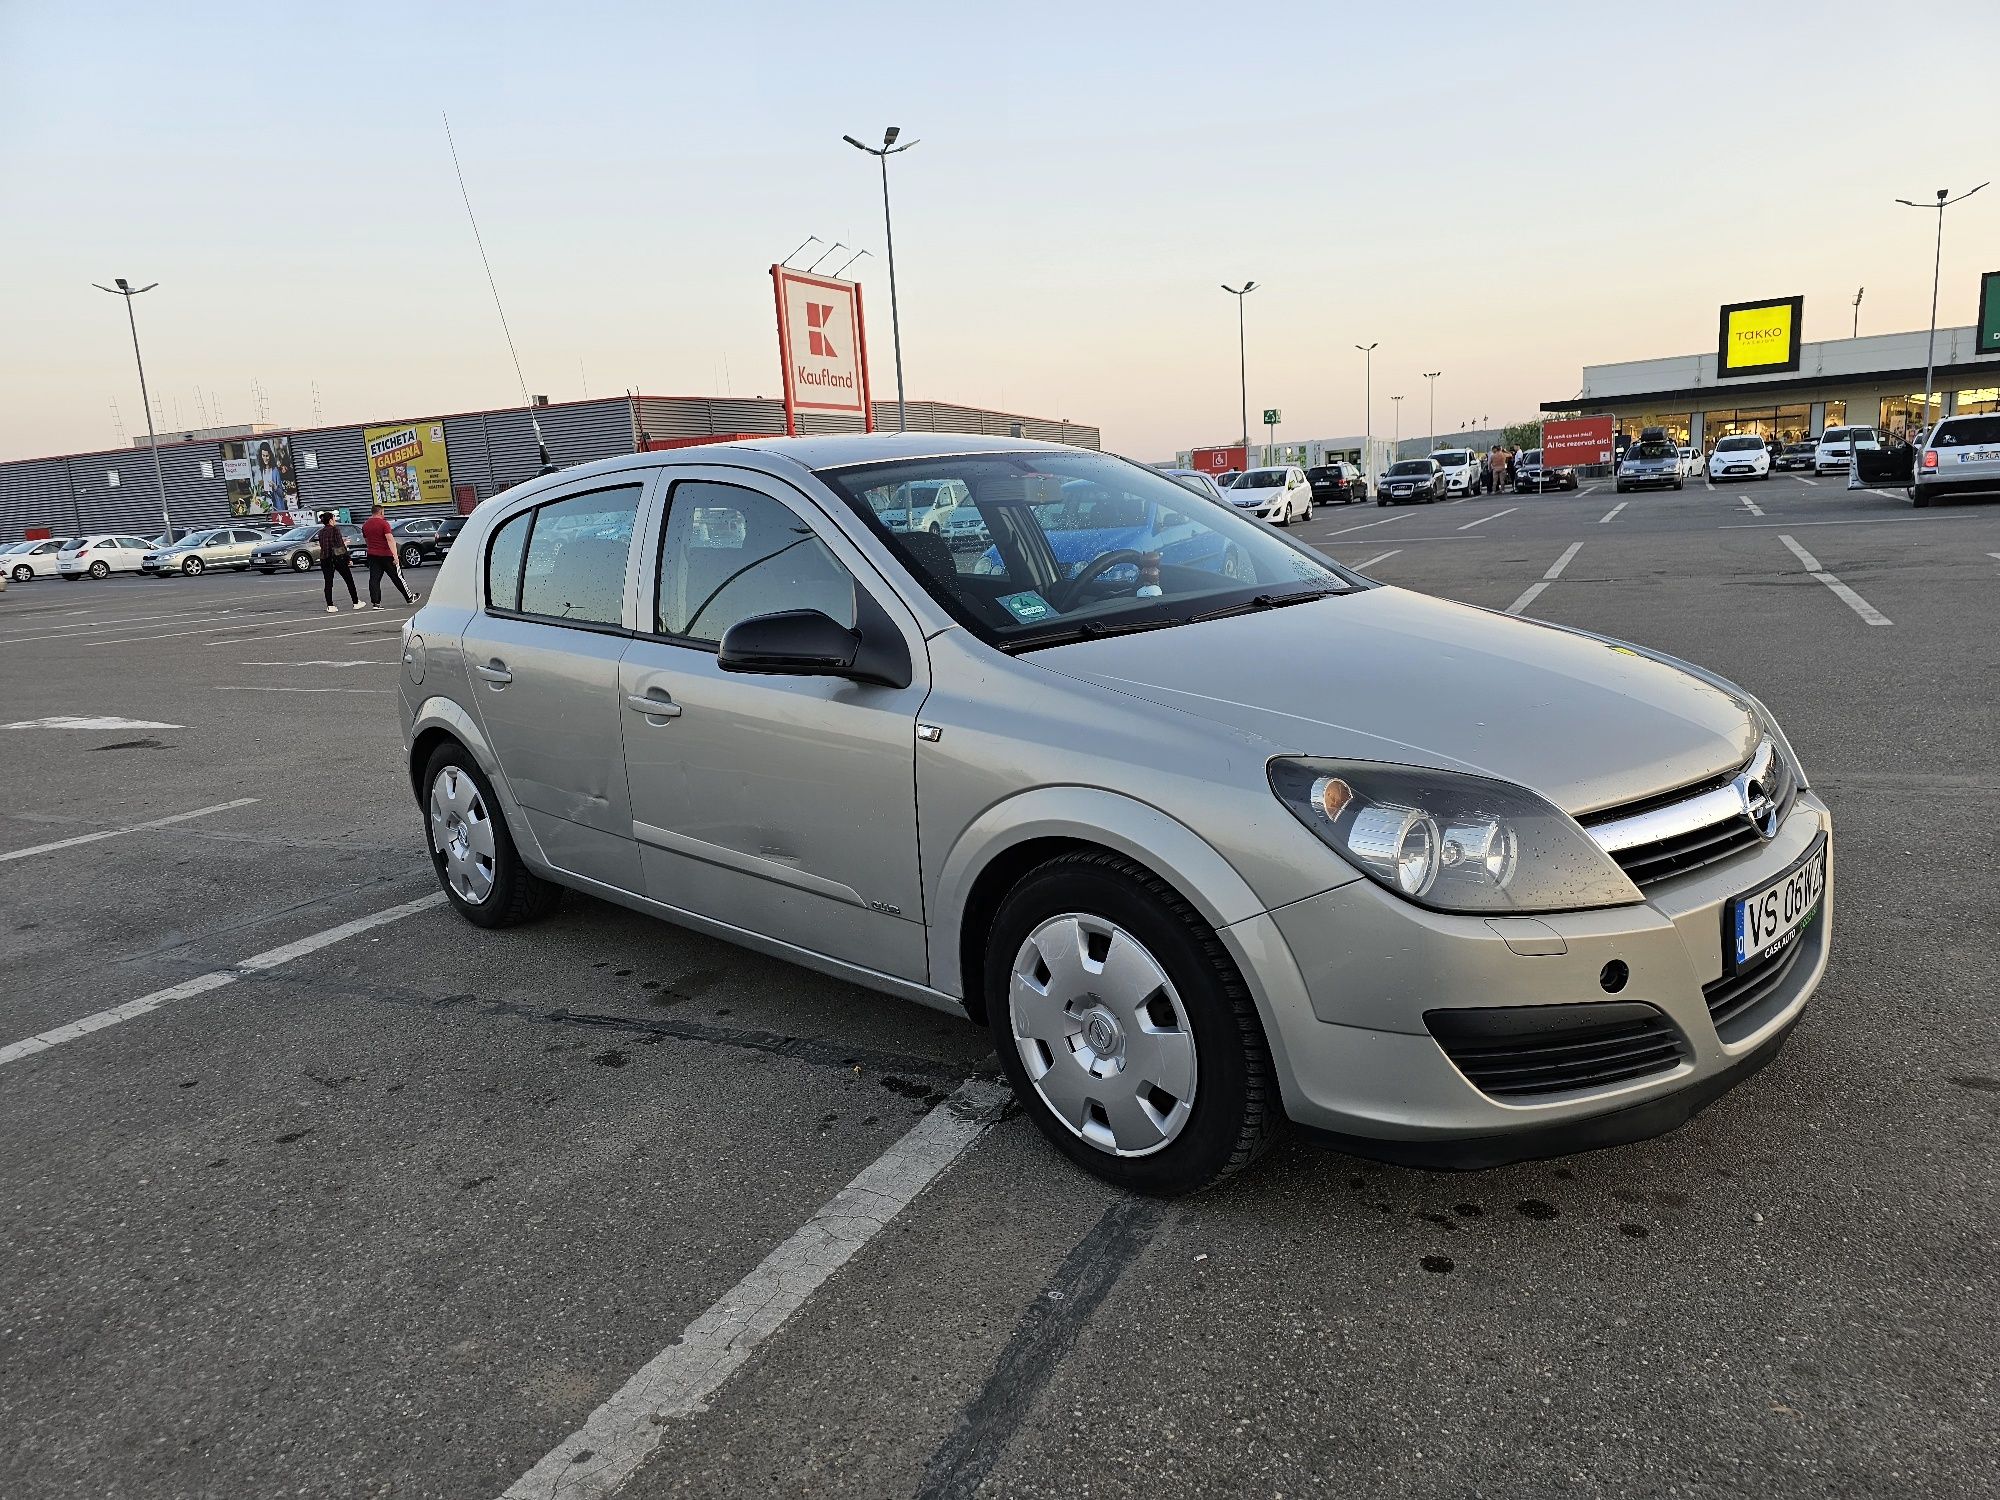 Opel Astra H 1.9 cdti